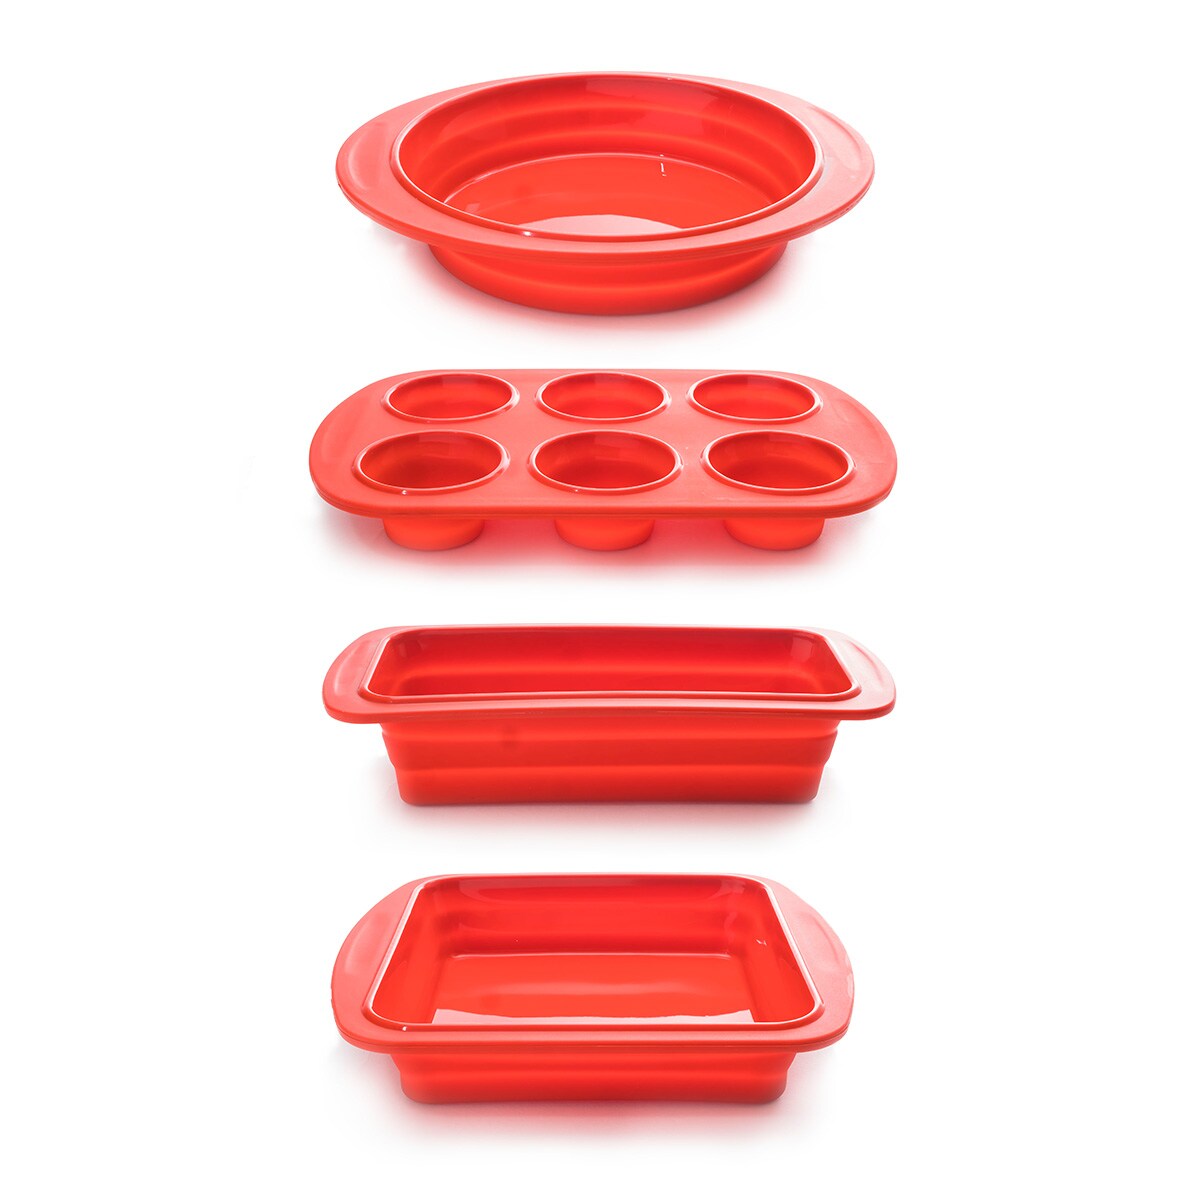 Ronco Cooks Companion 4-Piece Collapsible Silicone Bakeware Set